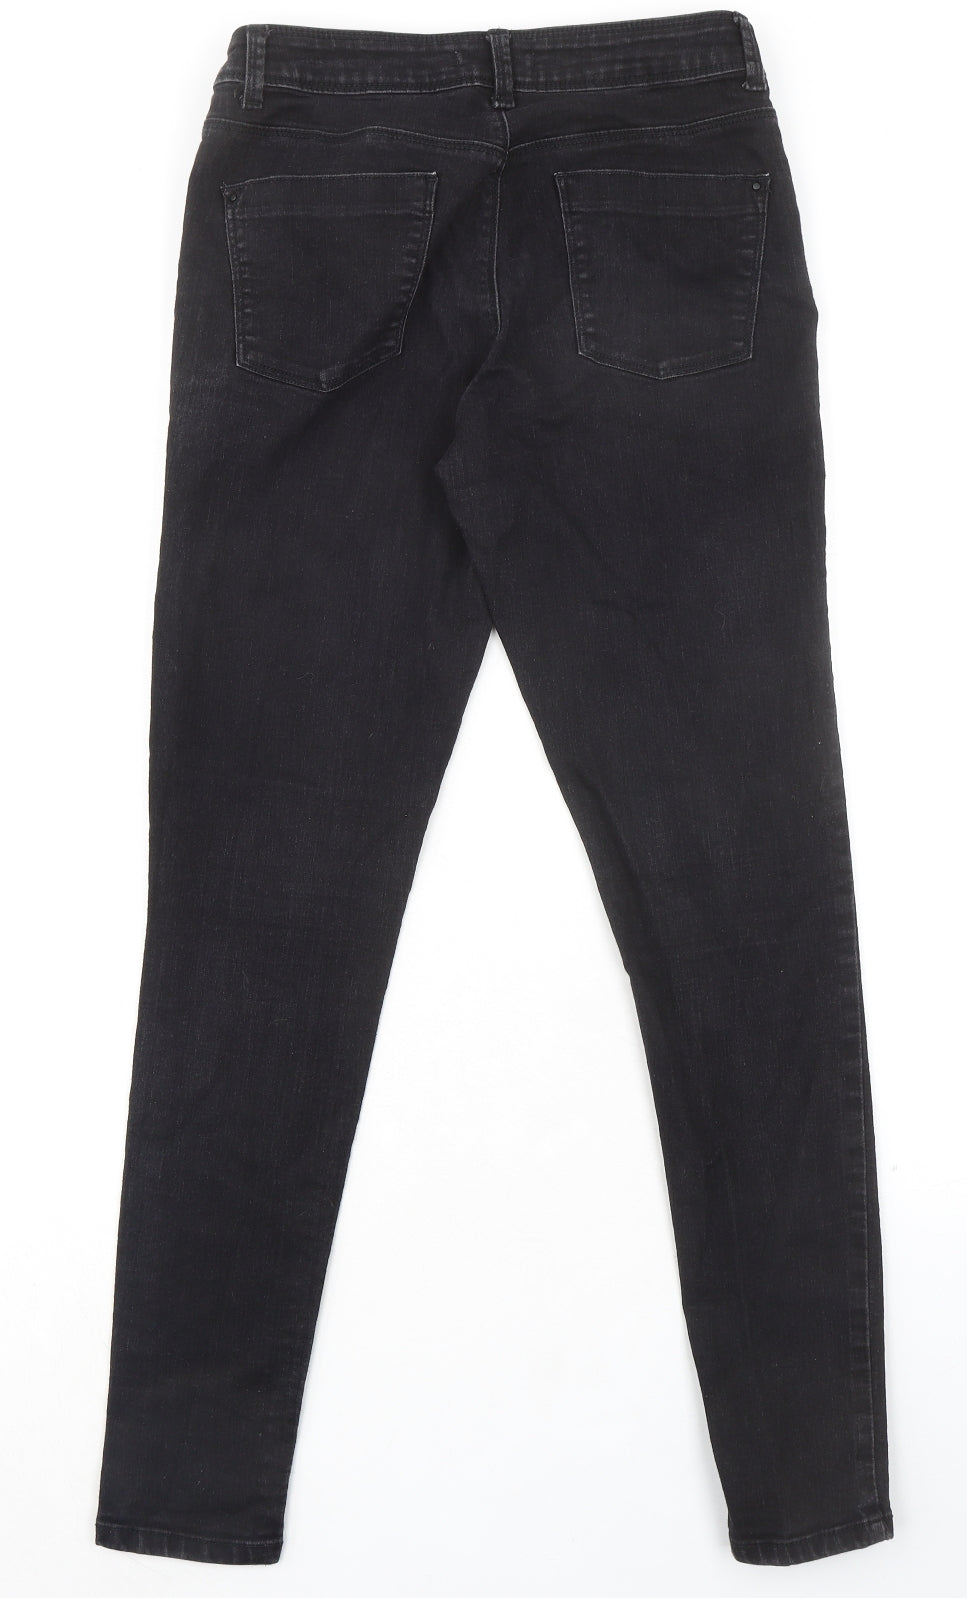 Dorothy Perkins Womens Black Cotton Skinny Jeans Size 12 L30 in Regular Zip